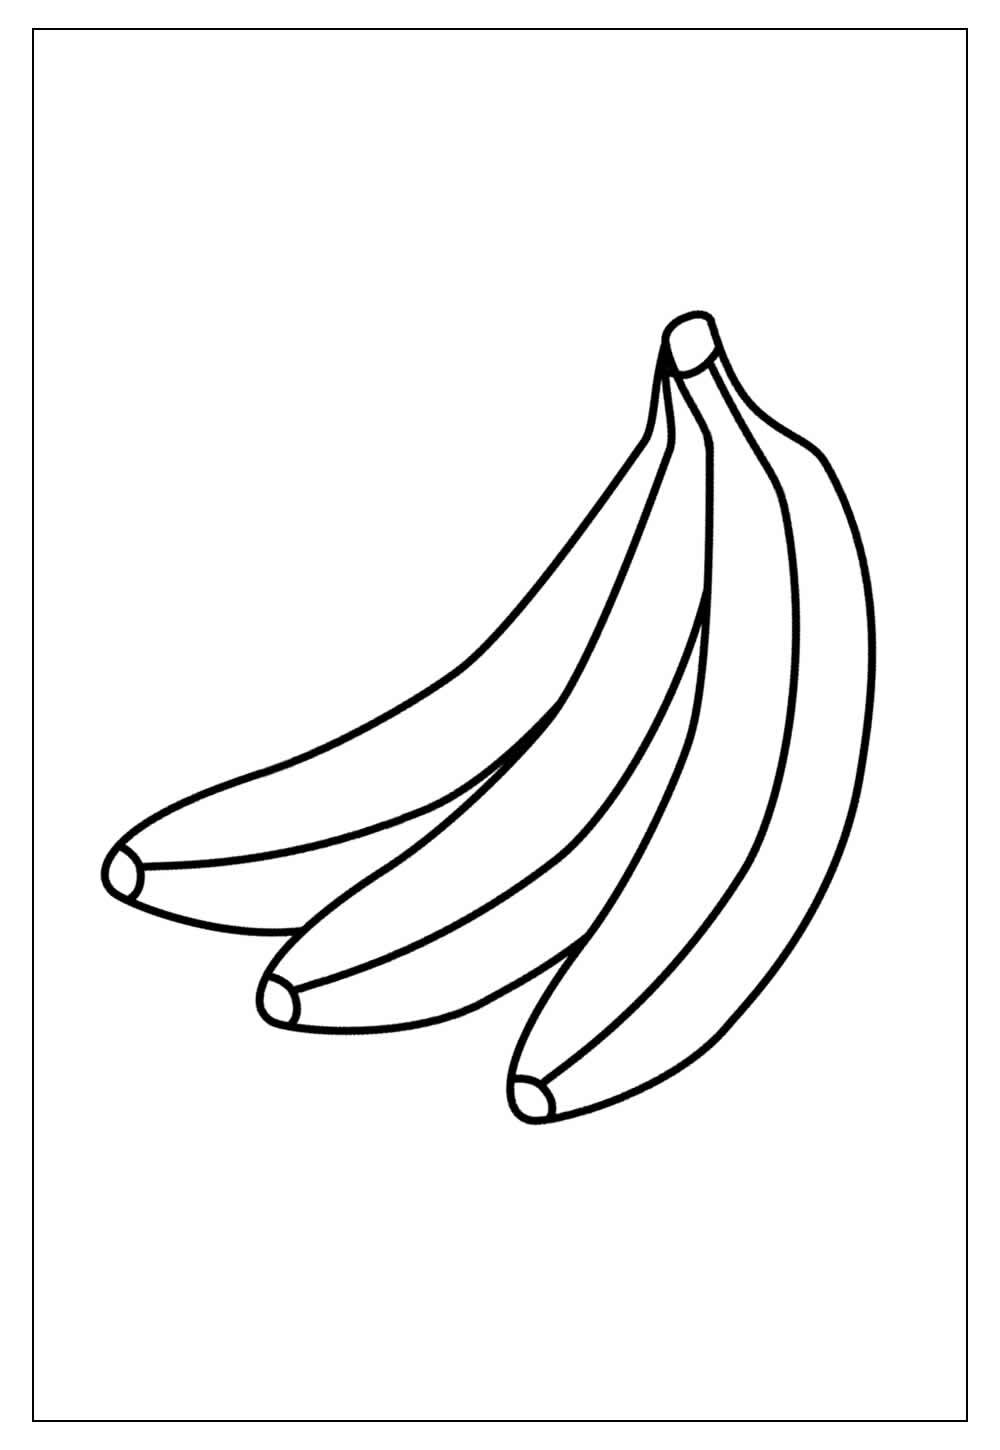 Desenho de Banana para colorir